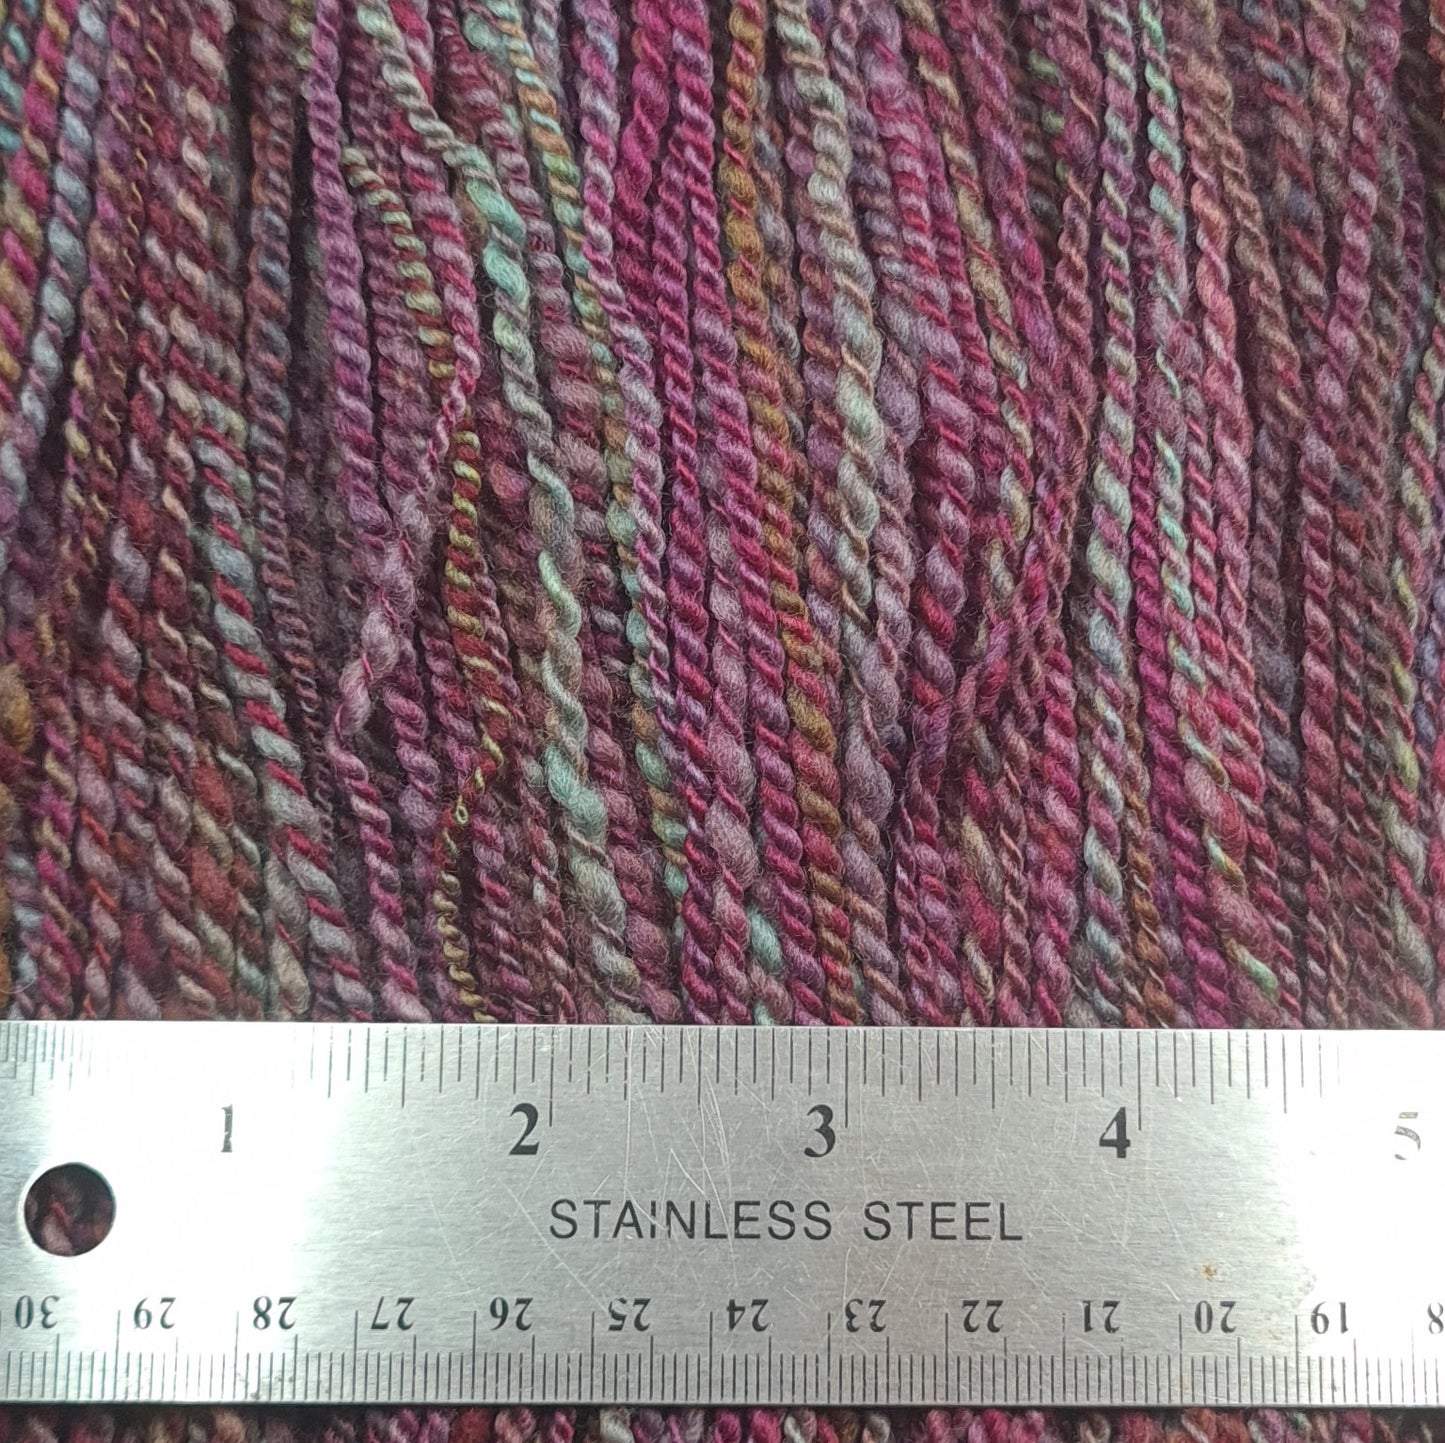 Handspun Worsted/Aran yarn, 119g skein, Kettle dyed Merino Wool, Autumn Mix OOAK